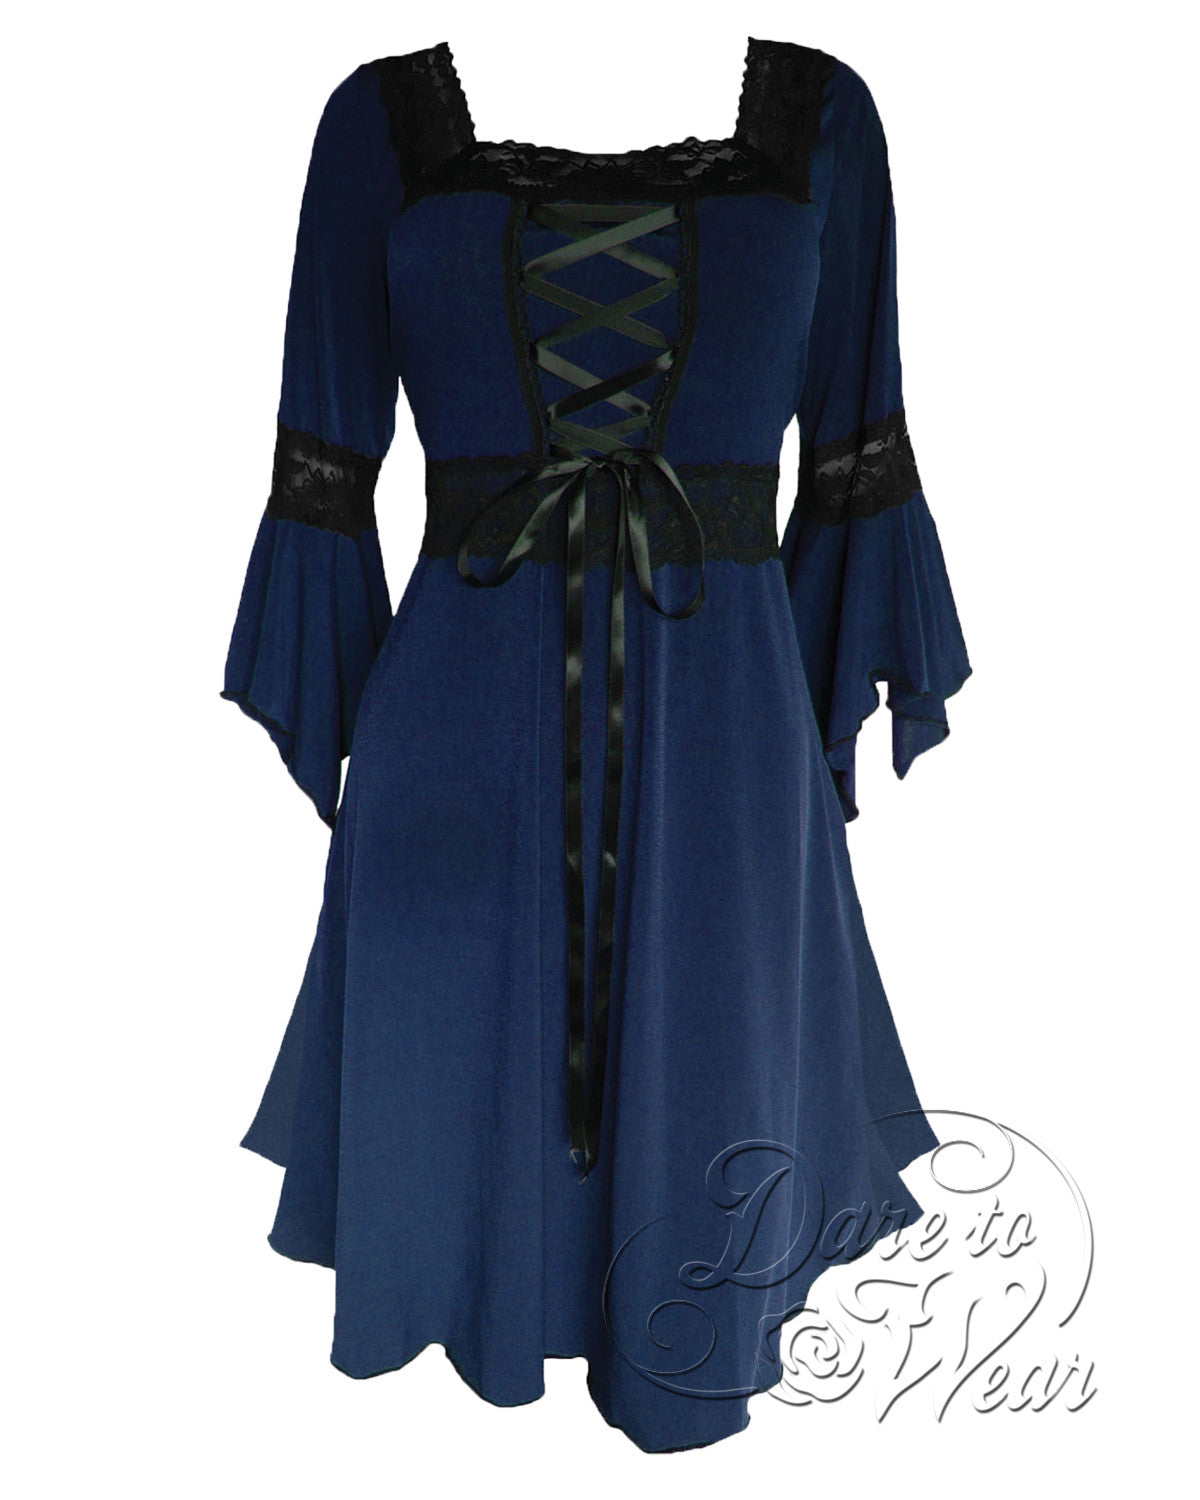 Renaissance maiden/wench dress - Bodice Skirt Corset Costume.